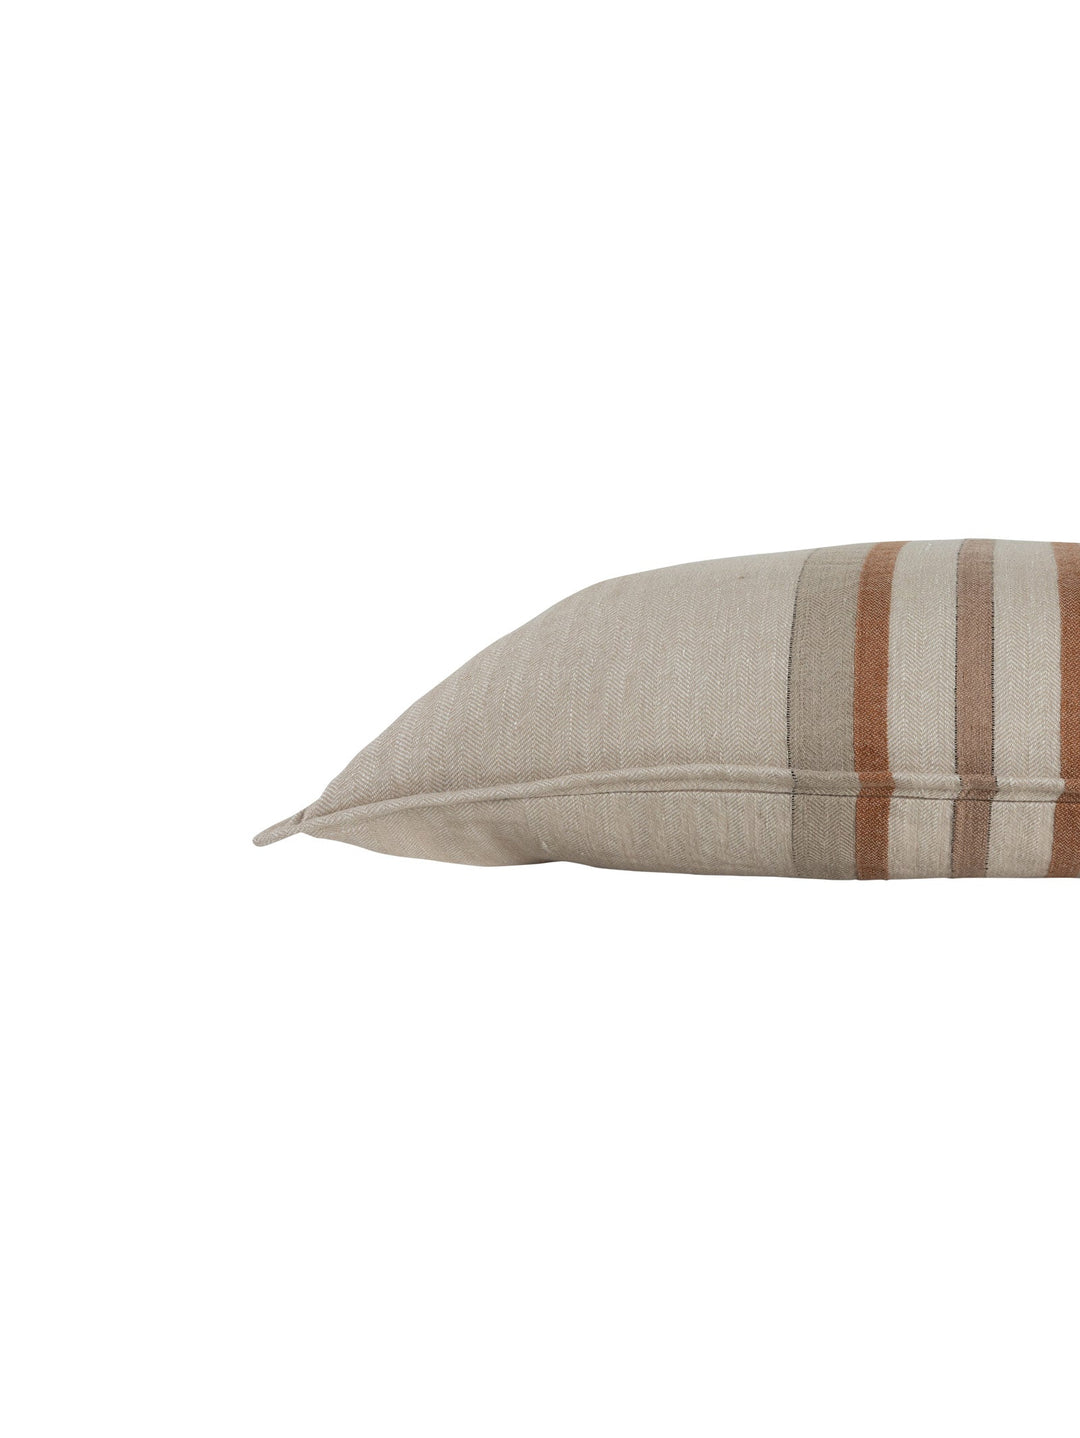 Sicily Pillowcase Set of 2 in Autumn - pillowcase- Hertex Haus Online - bed & bath